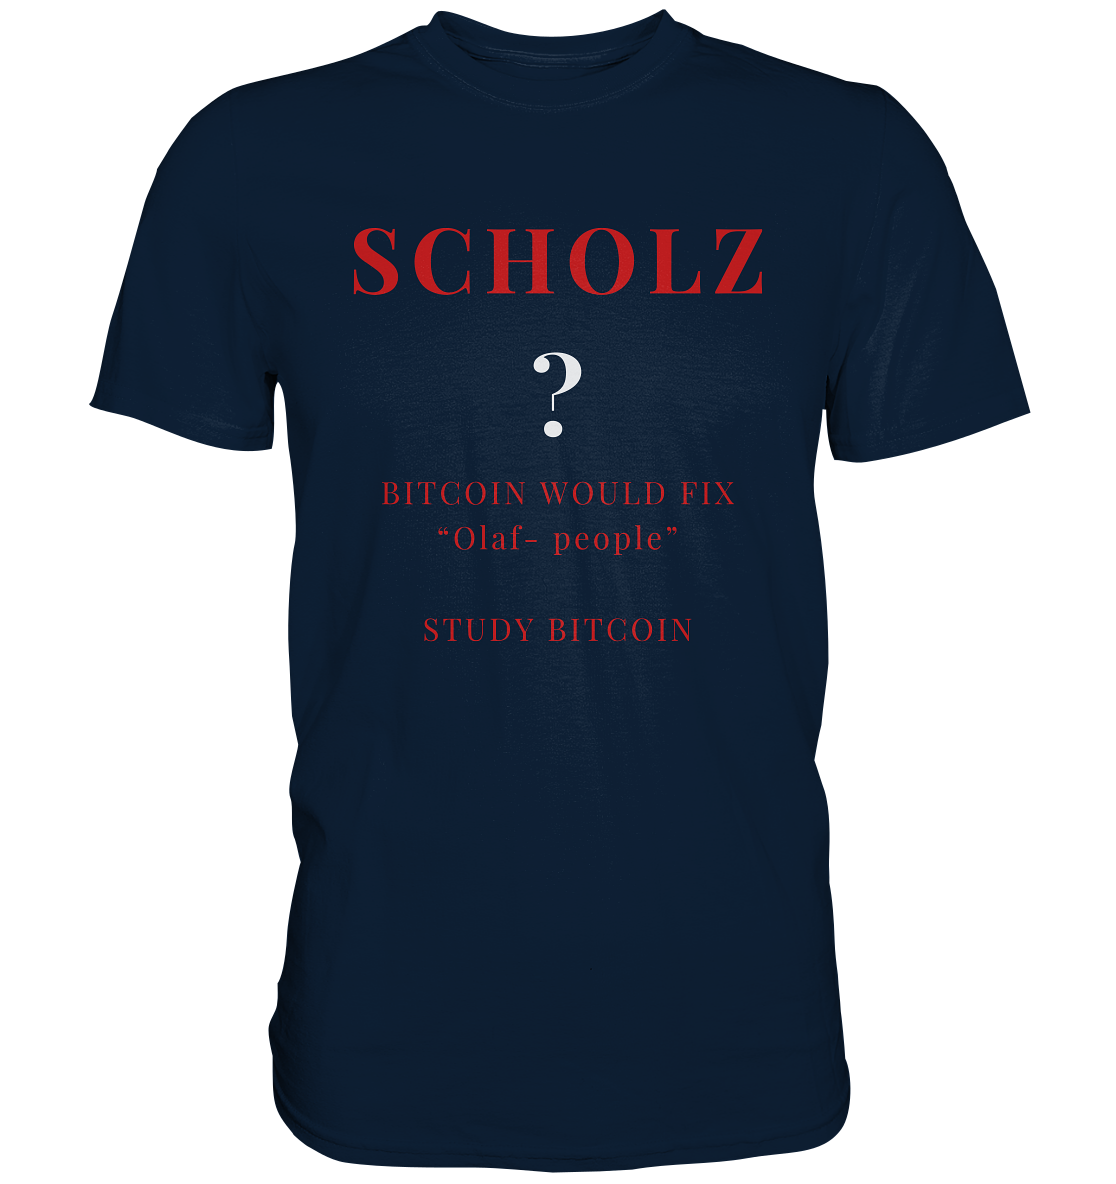 SCHOLZ ? BITCOIN WOULD FIX "Olaf people" STUDY BITCOIN - (Ladies Collection 21% Rabatt bis zum Halving 2024) - Premium Shirt